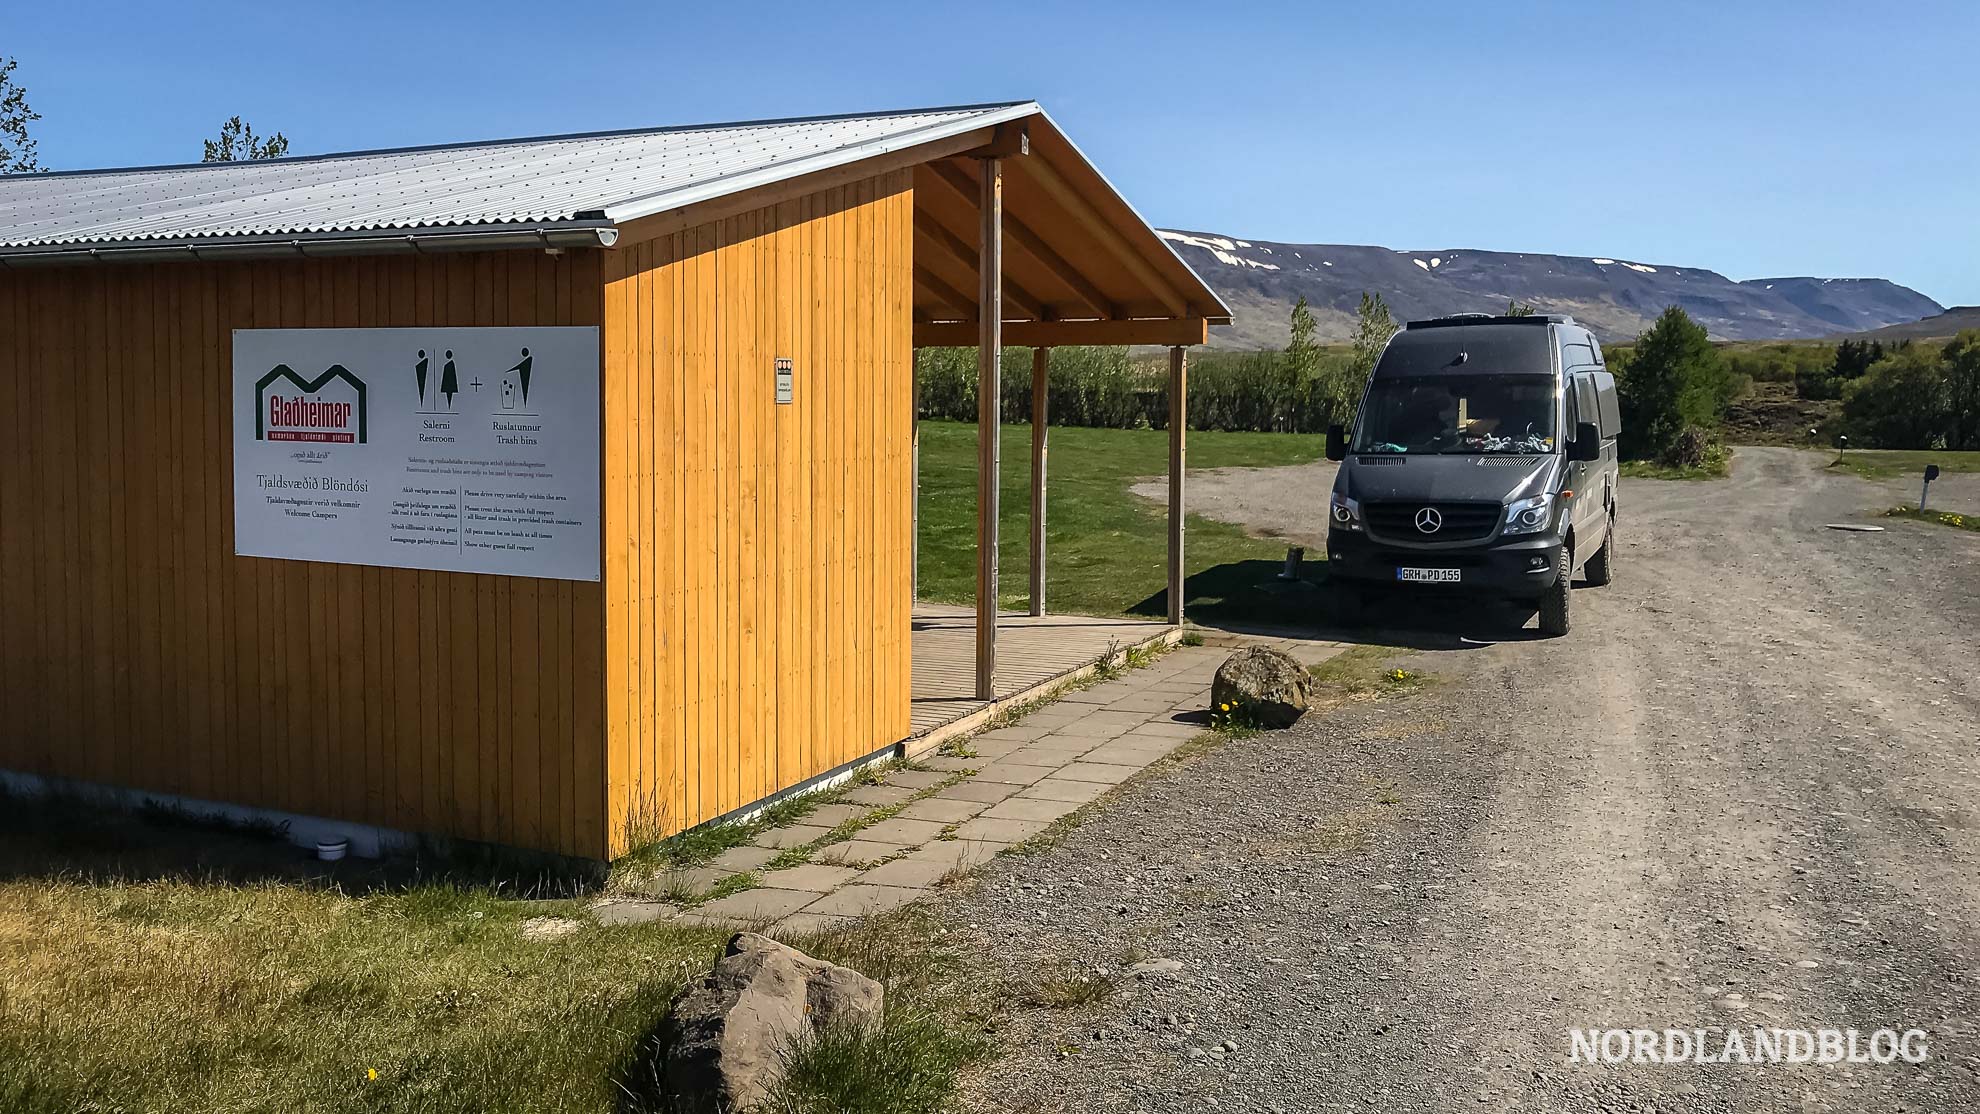 Sanitärgebäude auf dem Campingplatz Gladheimar Cottages Blönduós Island (Nordlandblog)